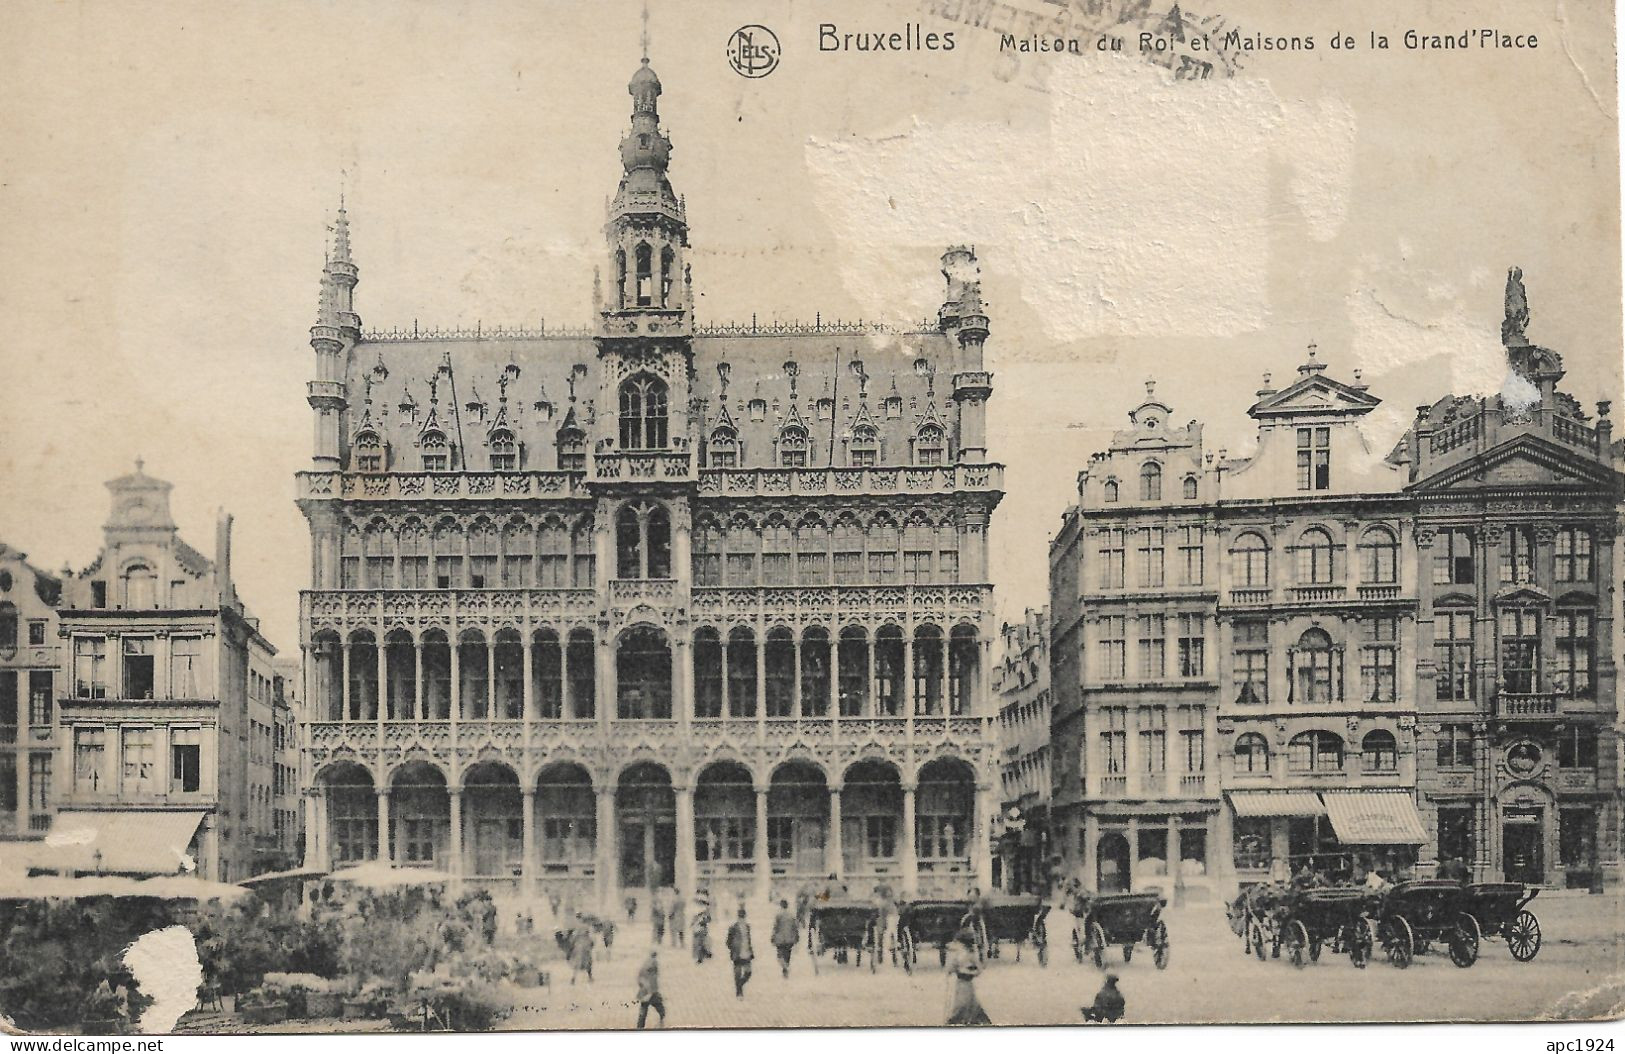 Belgica 1920 -  Postal Con Matasellos Especial De Los JJOO De 1920 - Circulada El 27 8 1920 A Paris - Estate 1920: Anversa